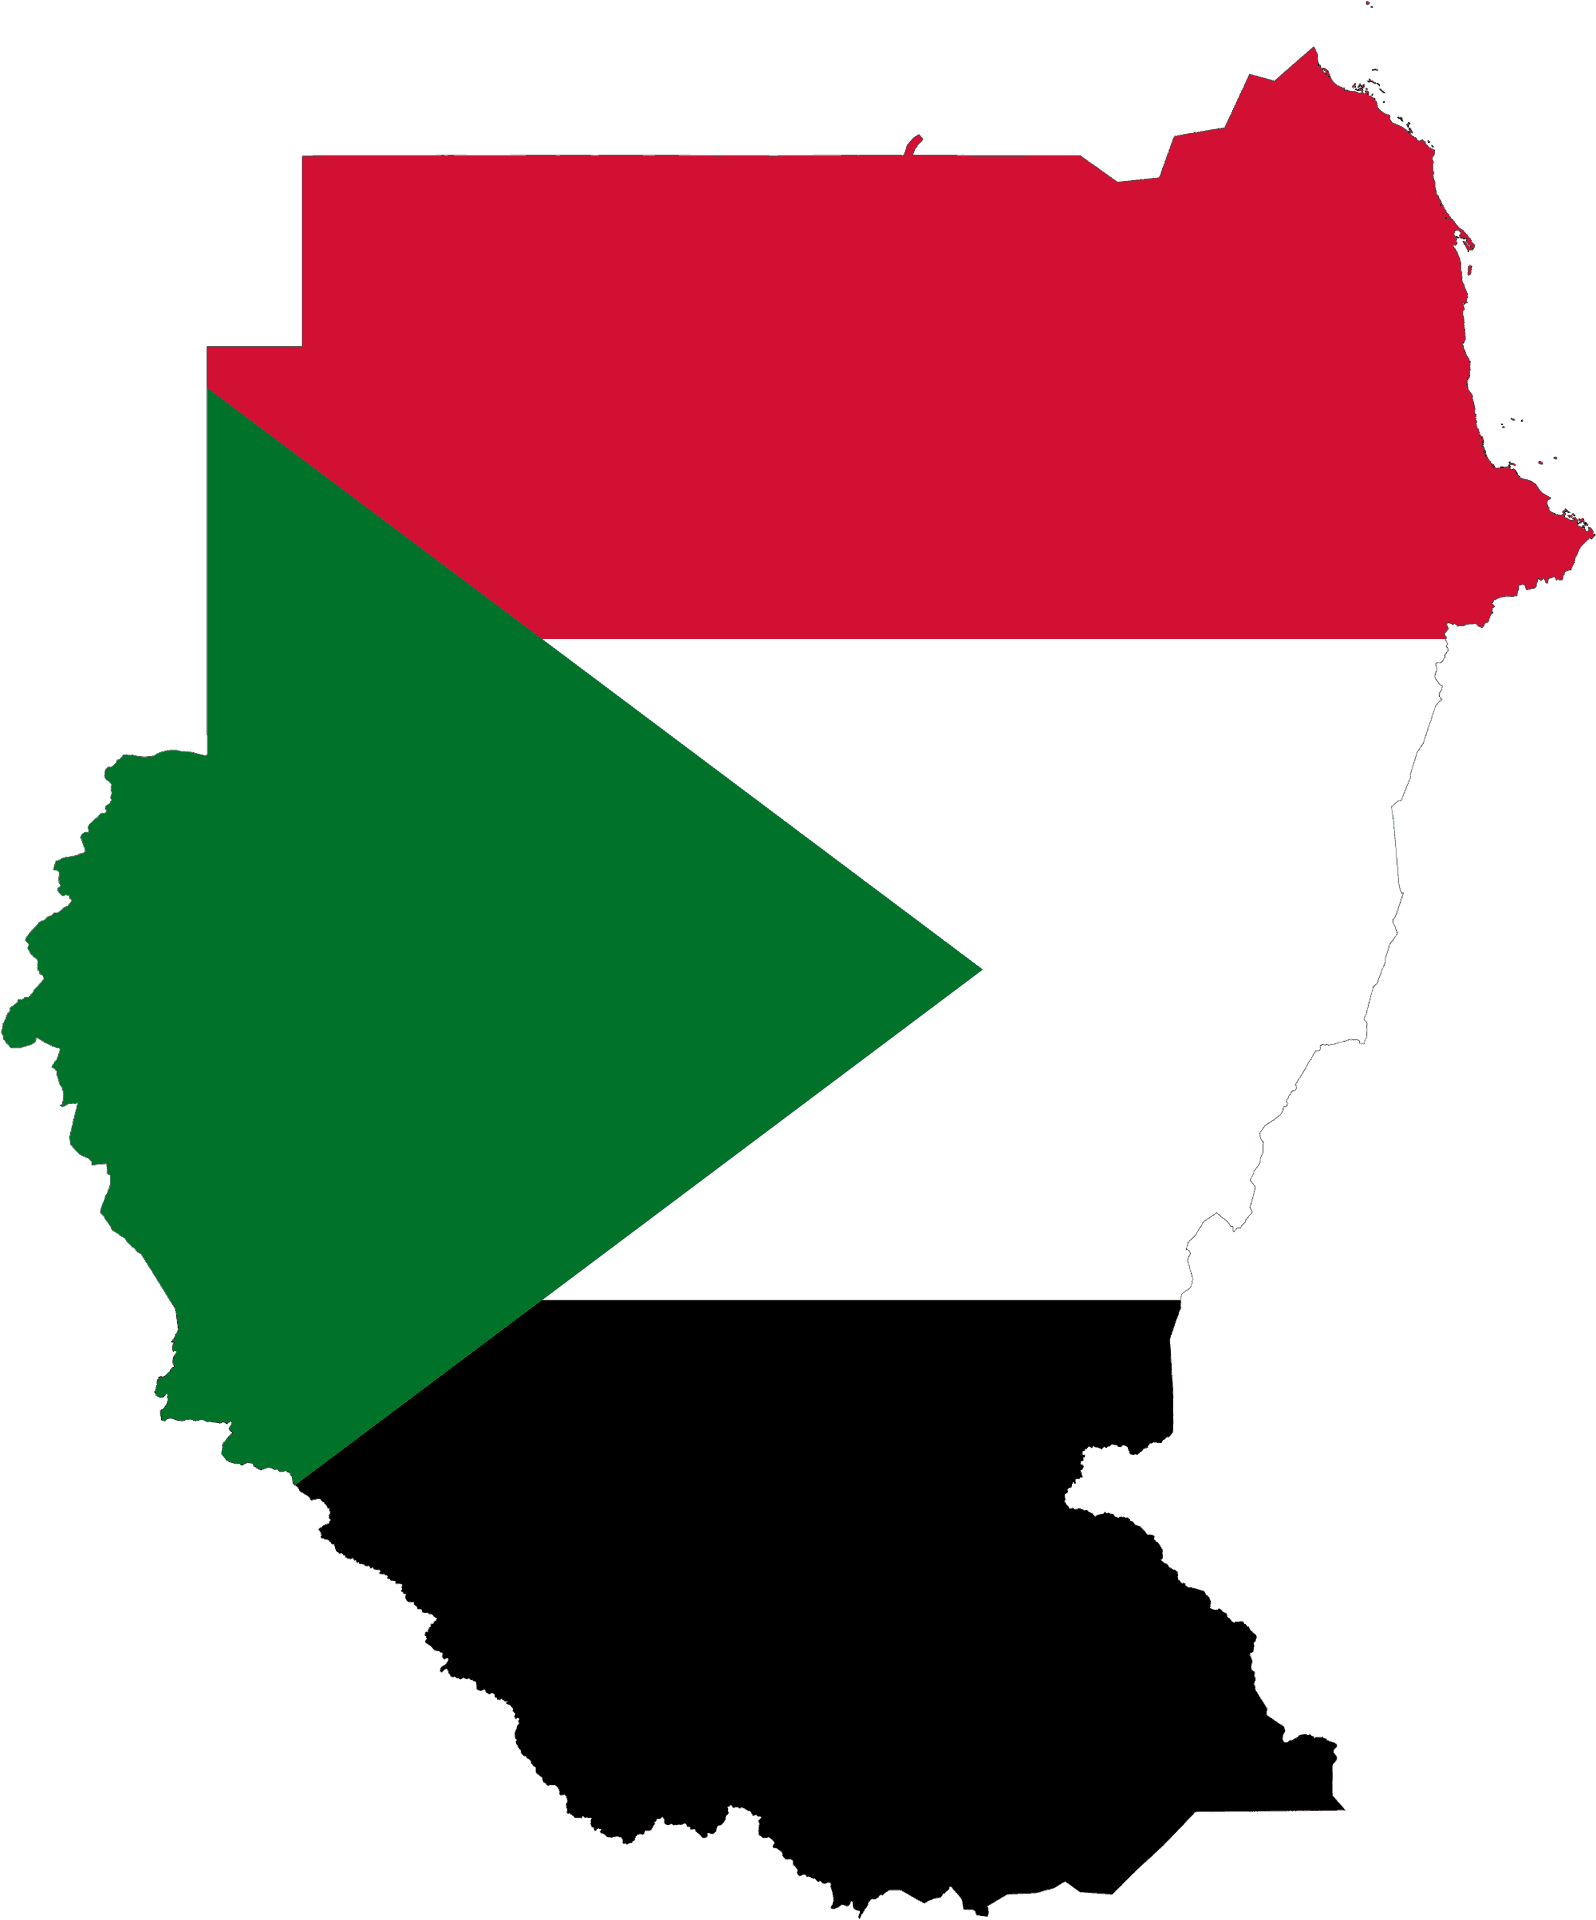 Sudan Mapwith Flag Overlay PNG